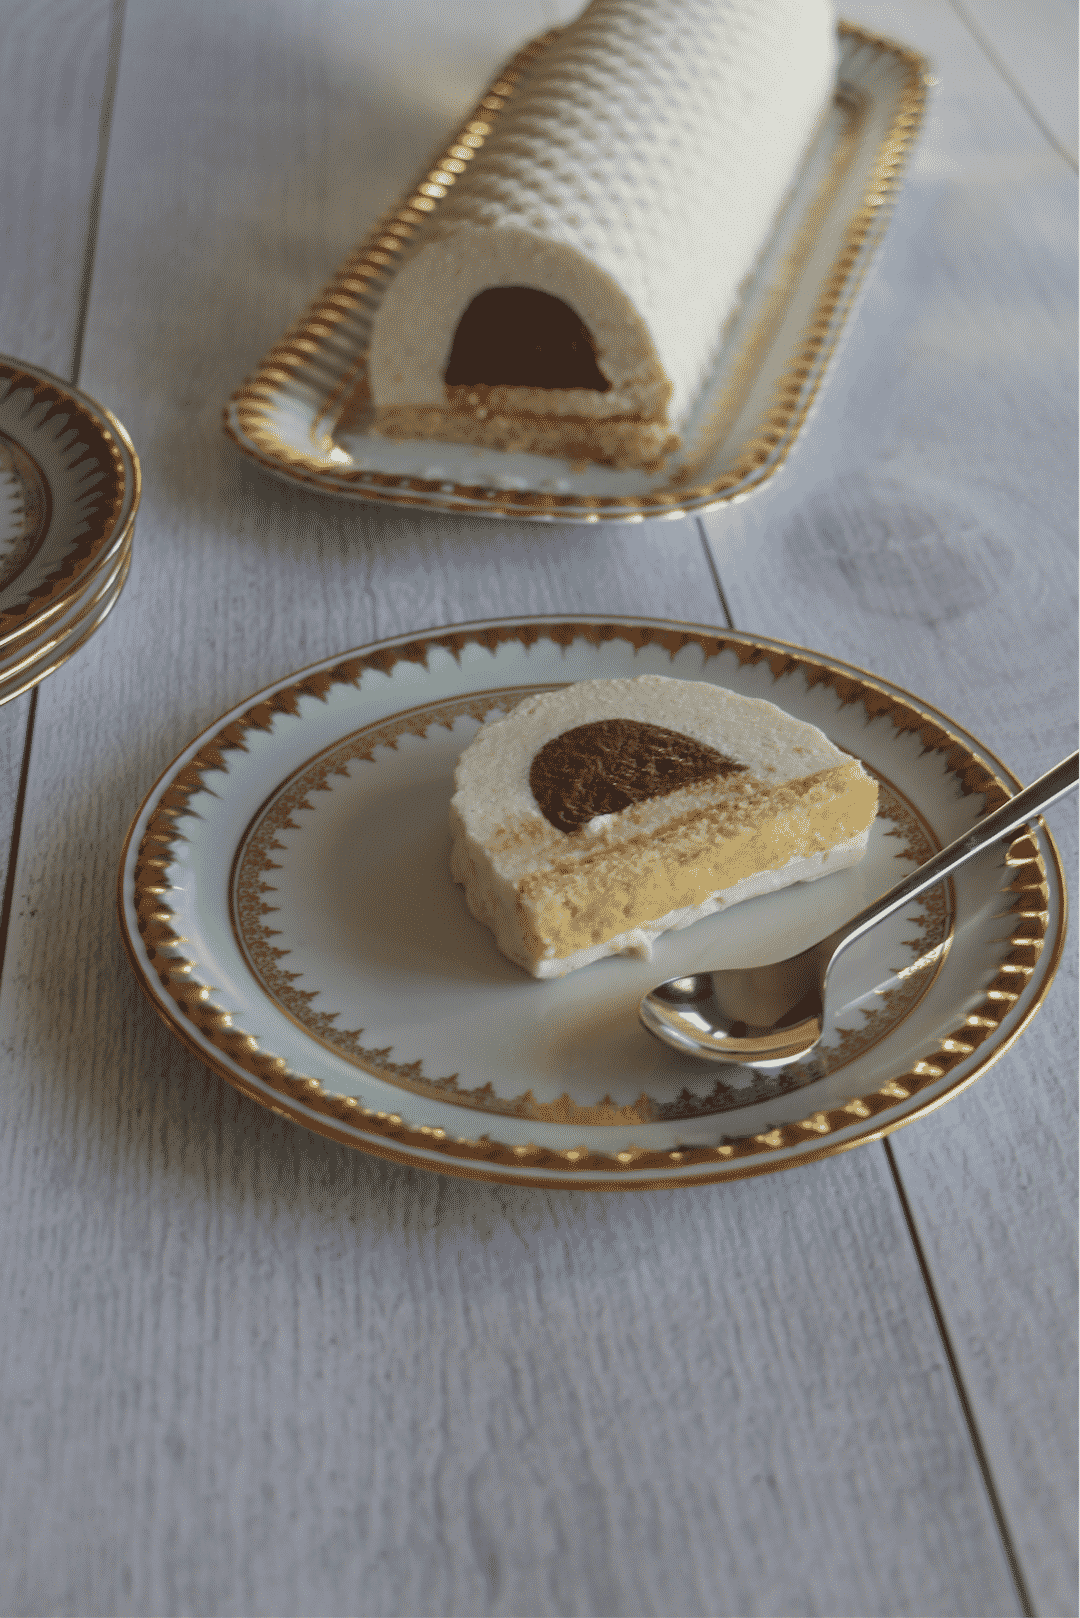 Sponge Cake à la Fraise (Gâteau Eponge) – Casserole & Chocolat